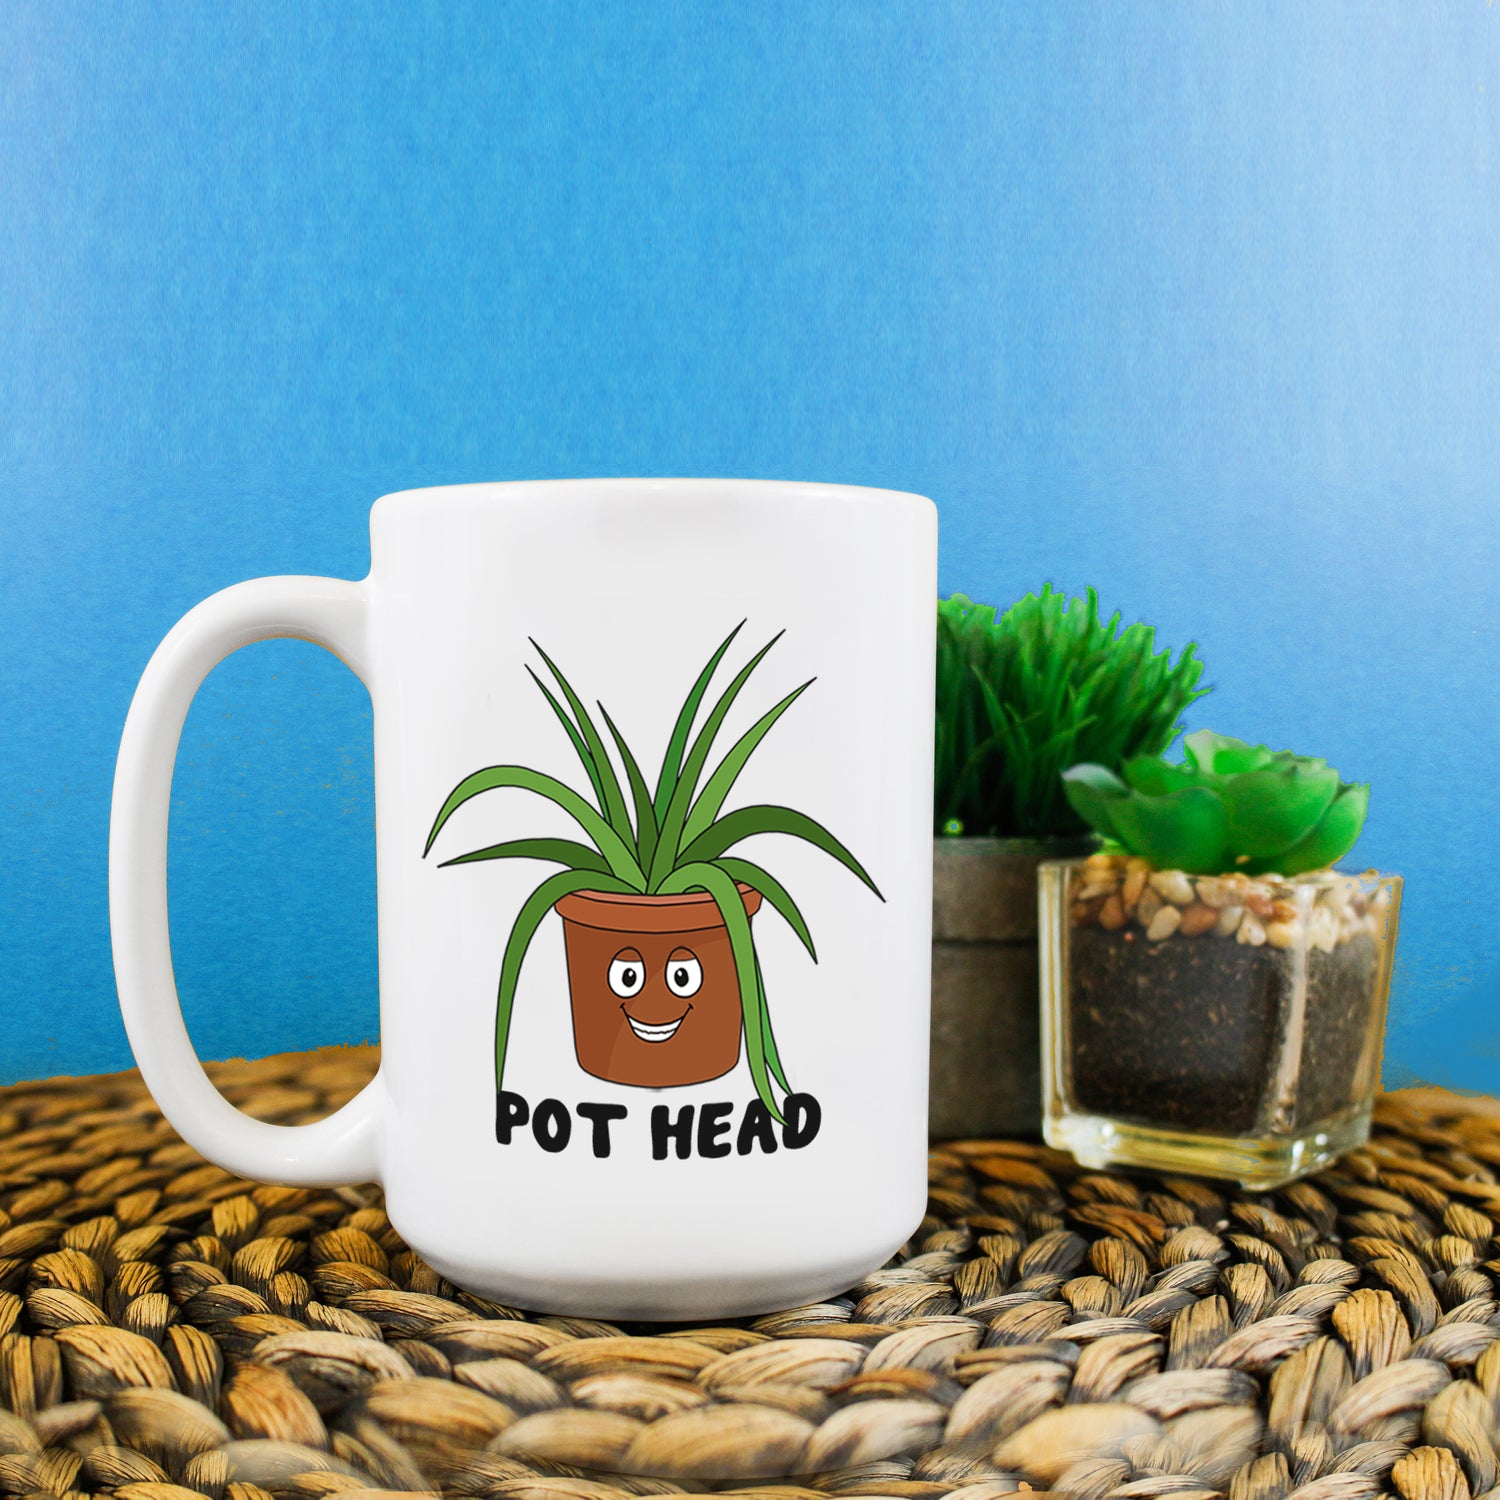 A funny mug. On the mug there's a smiling cartoon plant pot. Below it reads 'Pot Head.'